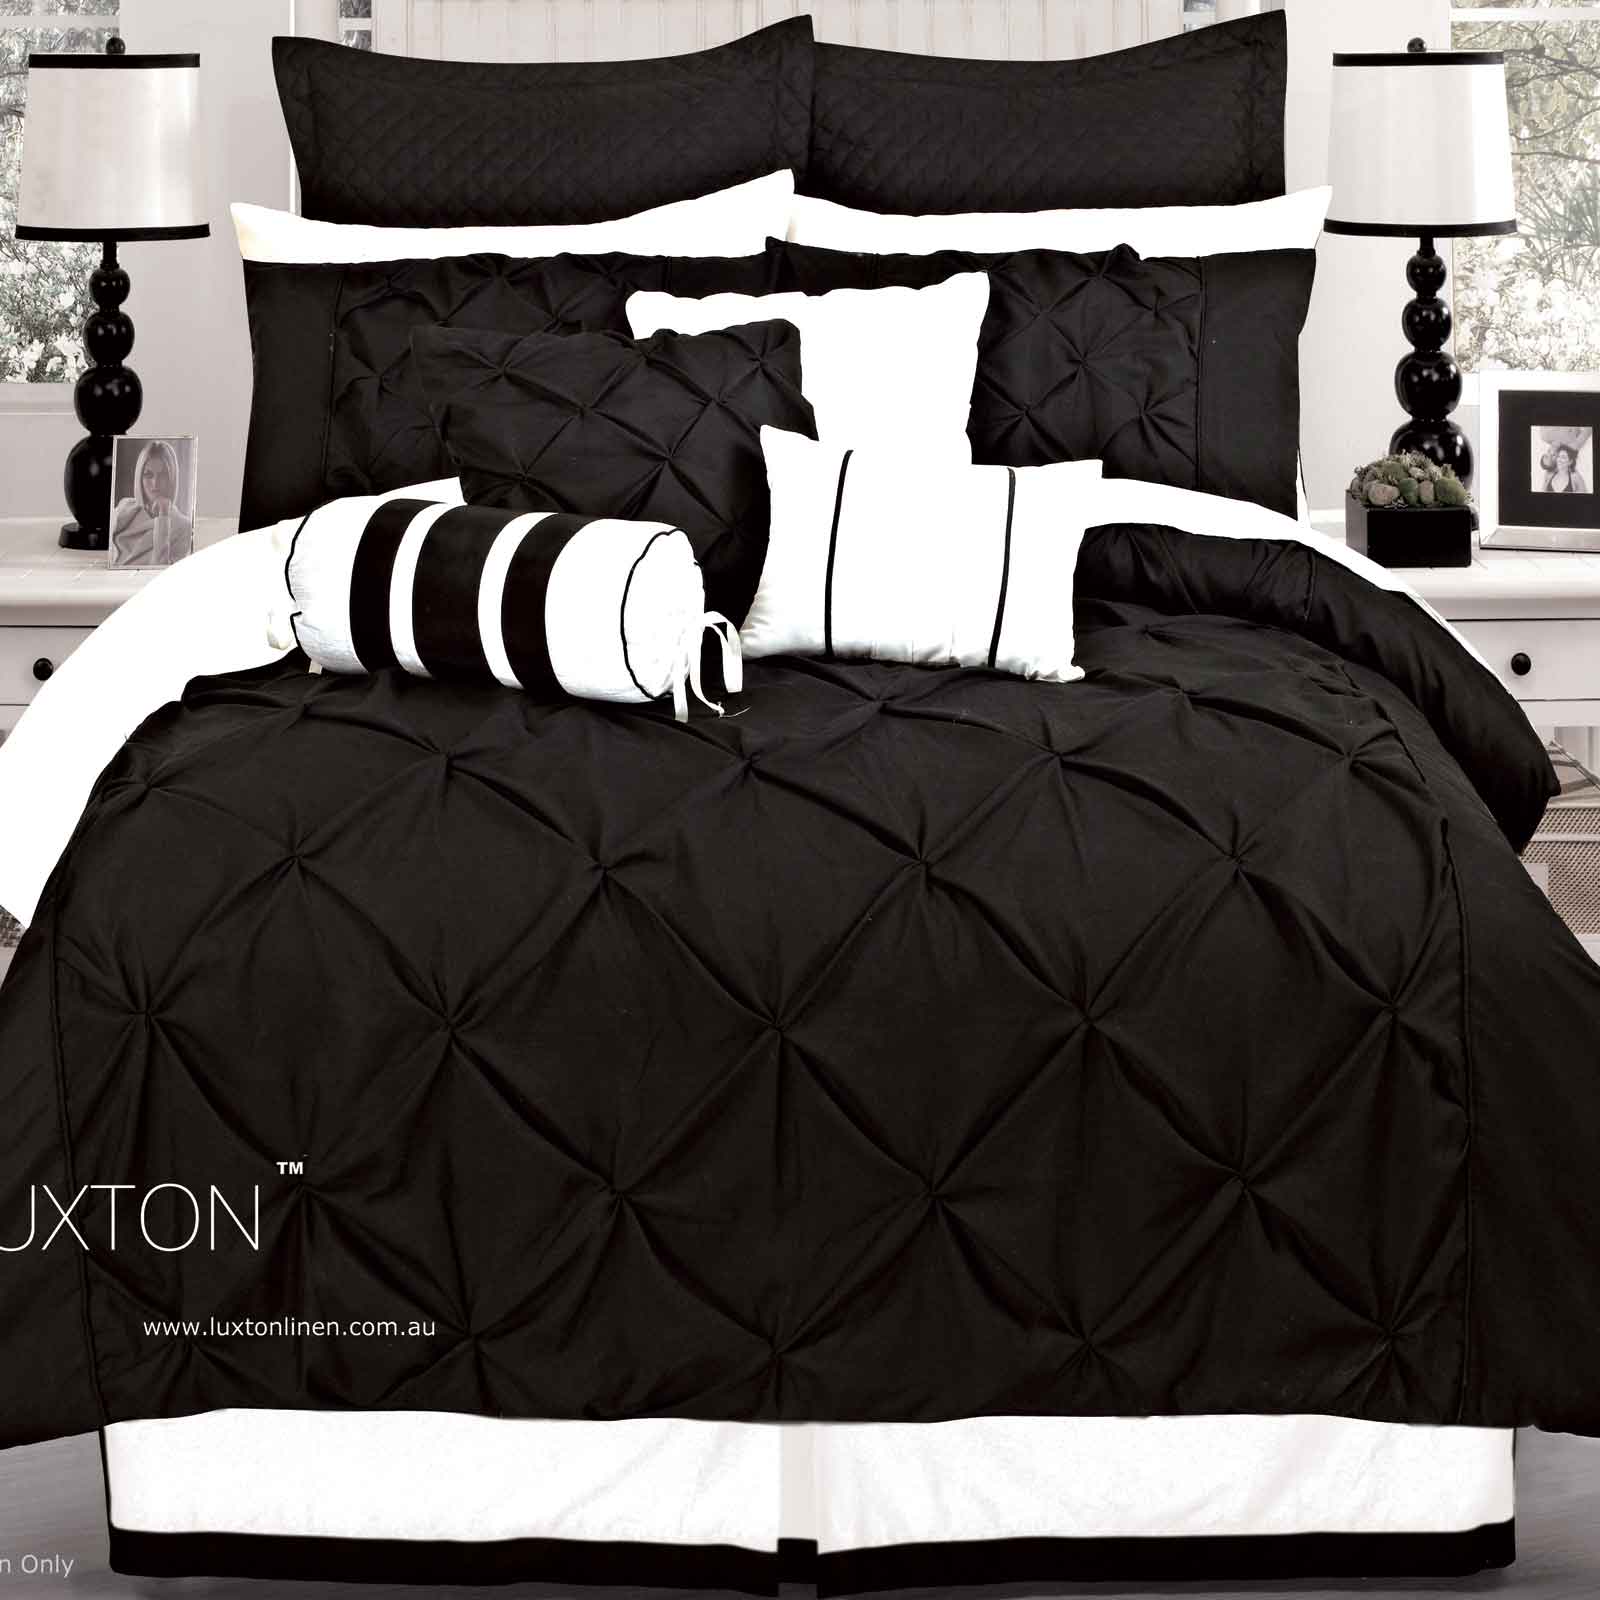 Details about Luxton Linen Bed - Queen / King Duvet / Quilt Cover Set ...